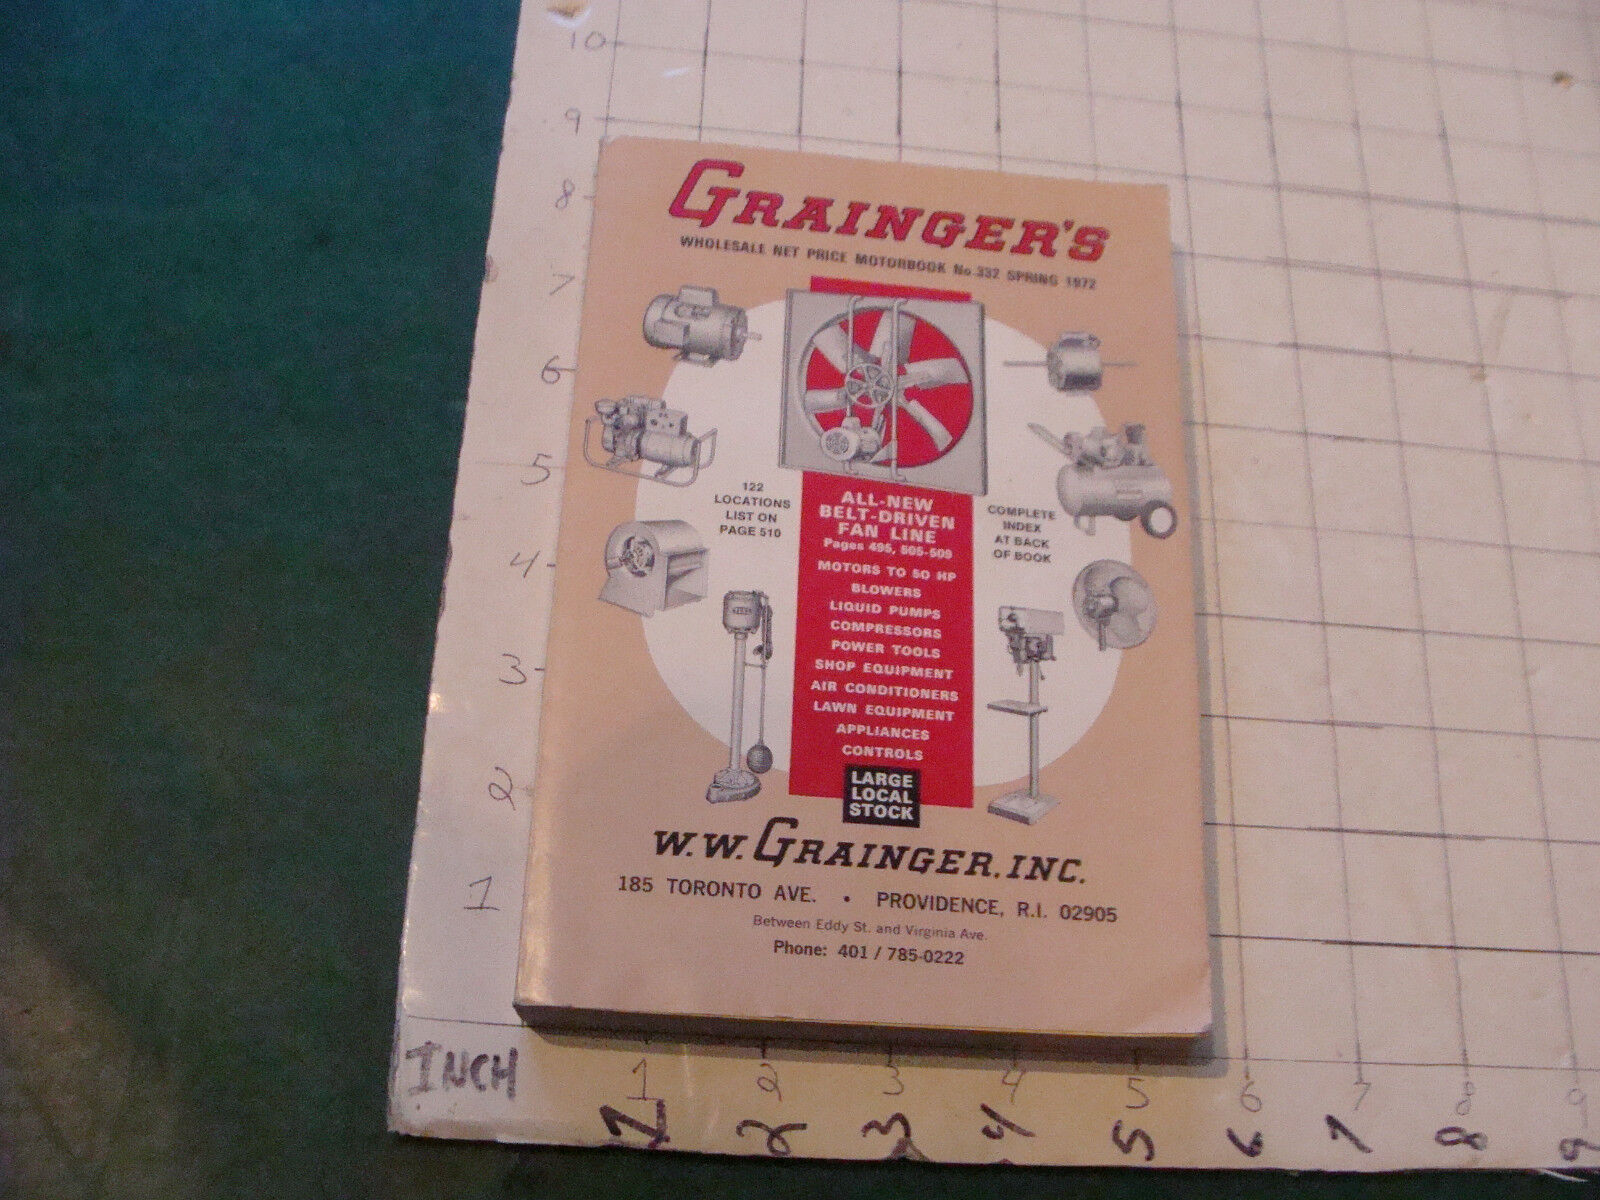 Orig Vintage GRAINGER'S wholesale motorbook catalog Spring 1972; 515pgs WOW